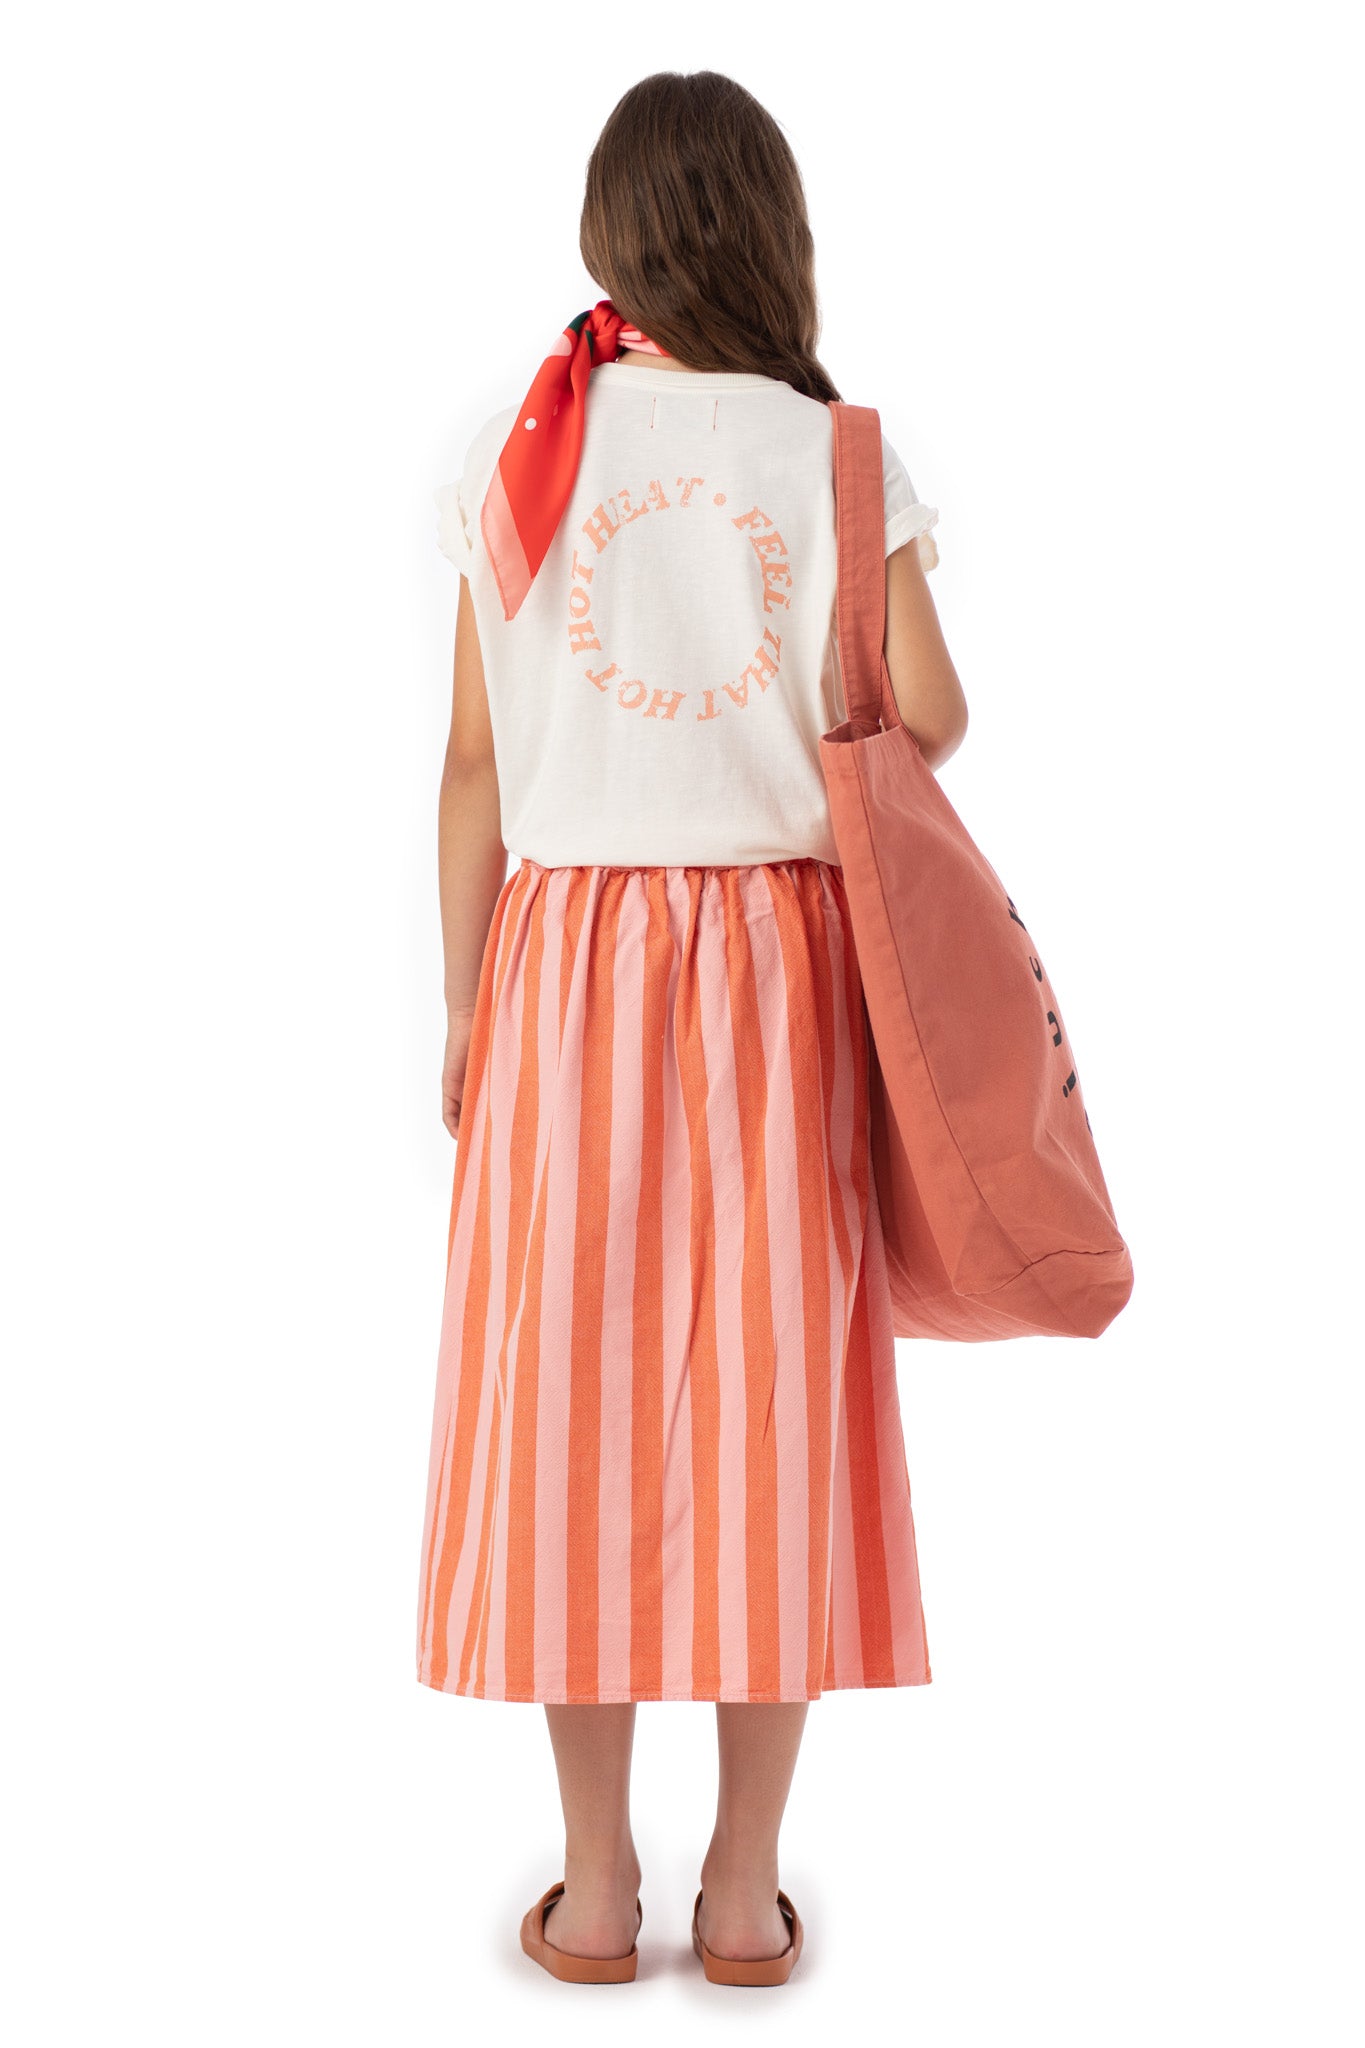 Piupiuchick Orange and Pink Stripe Long Pocket Skirt